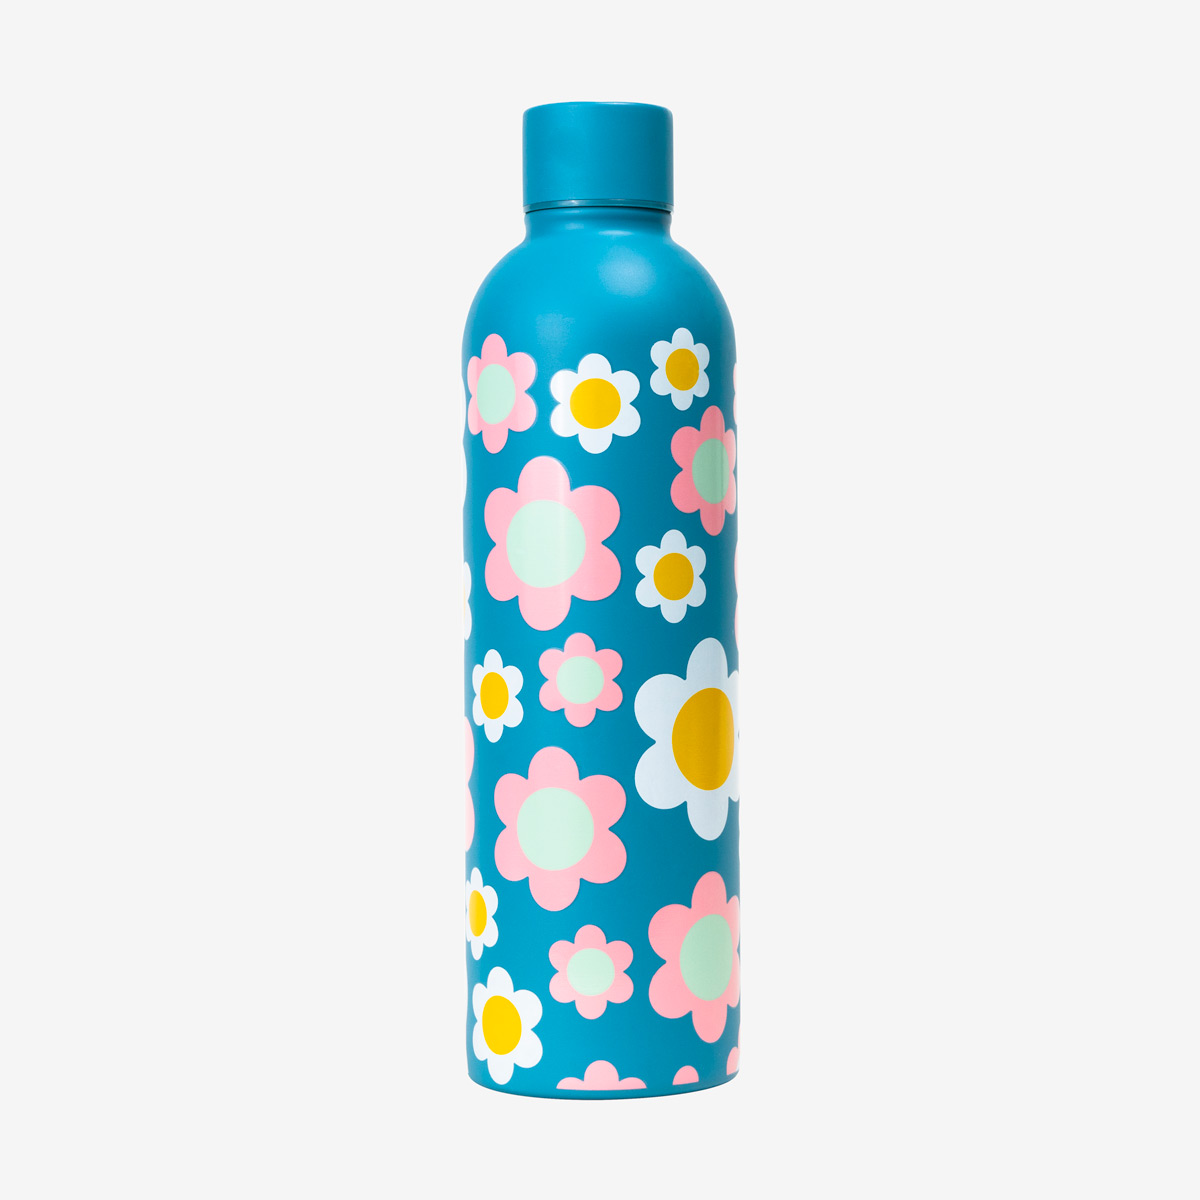 Hard Rock Music Festival Flower Power Water Bottle in Blue image number 3